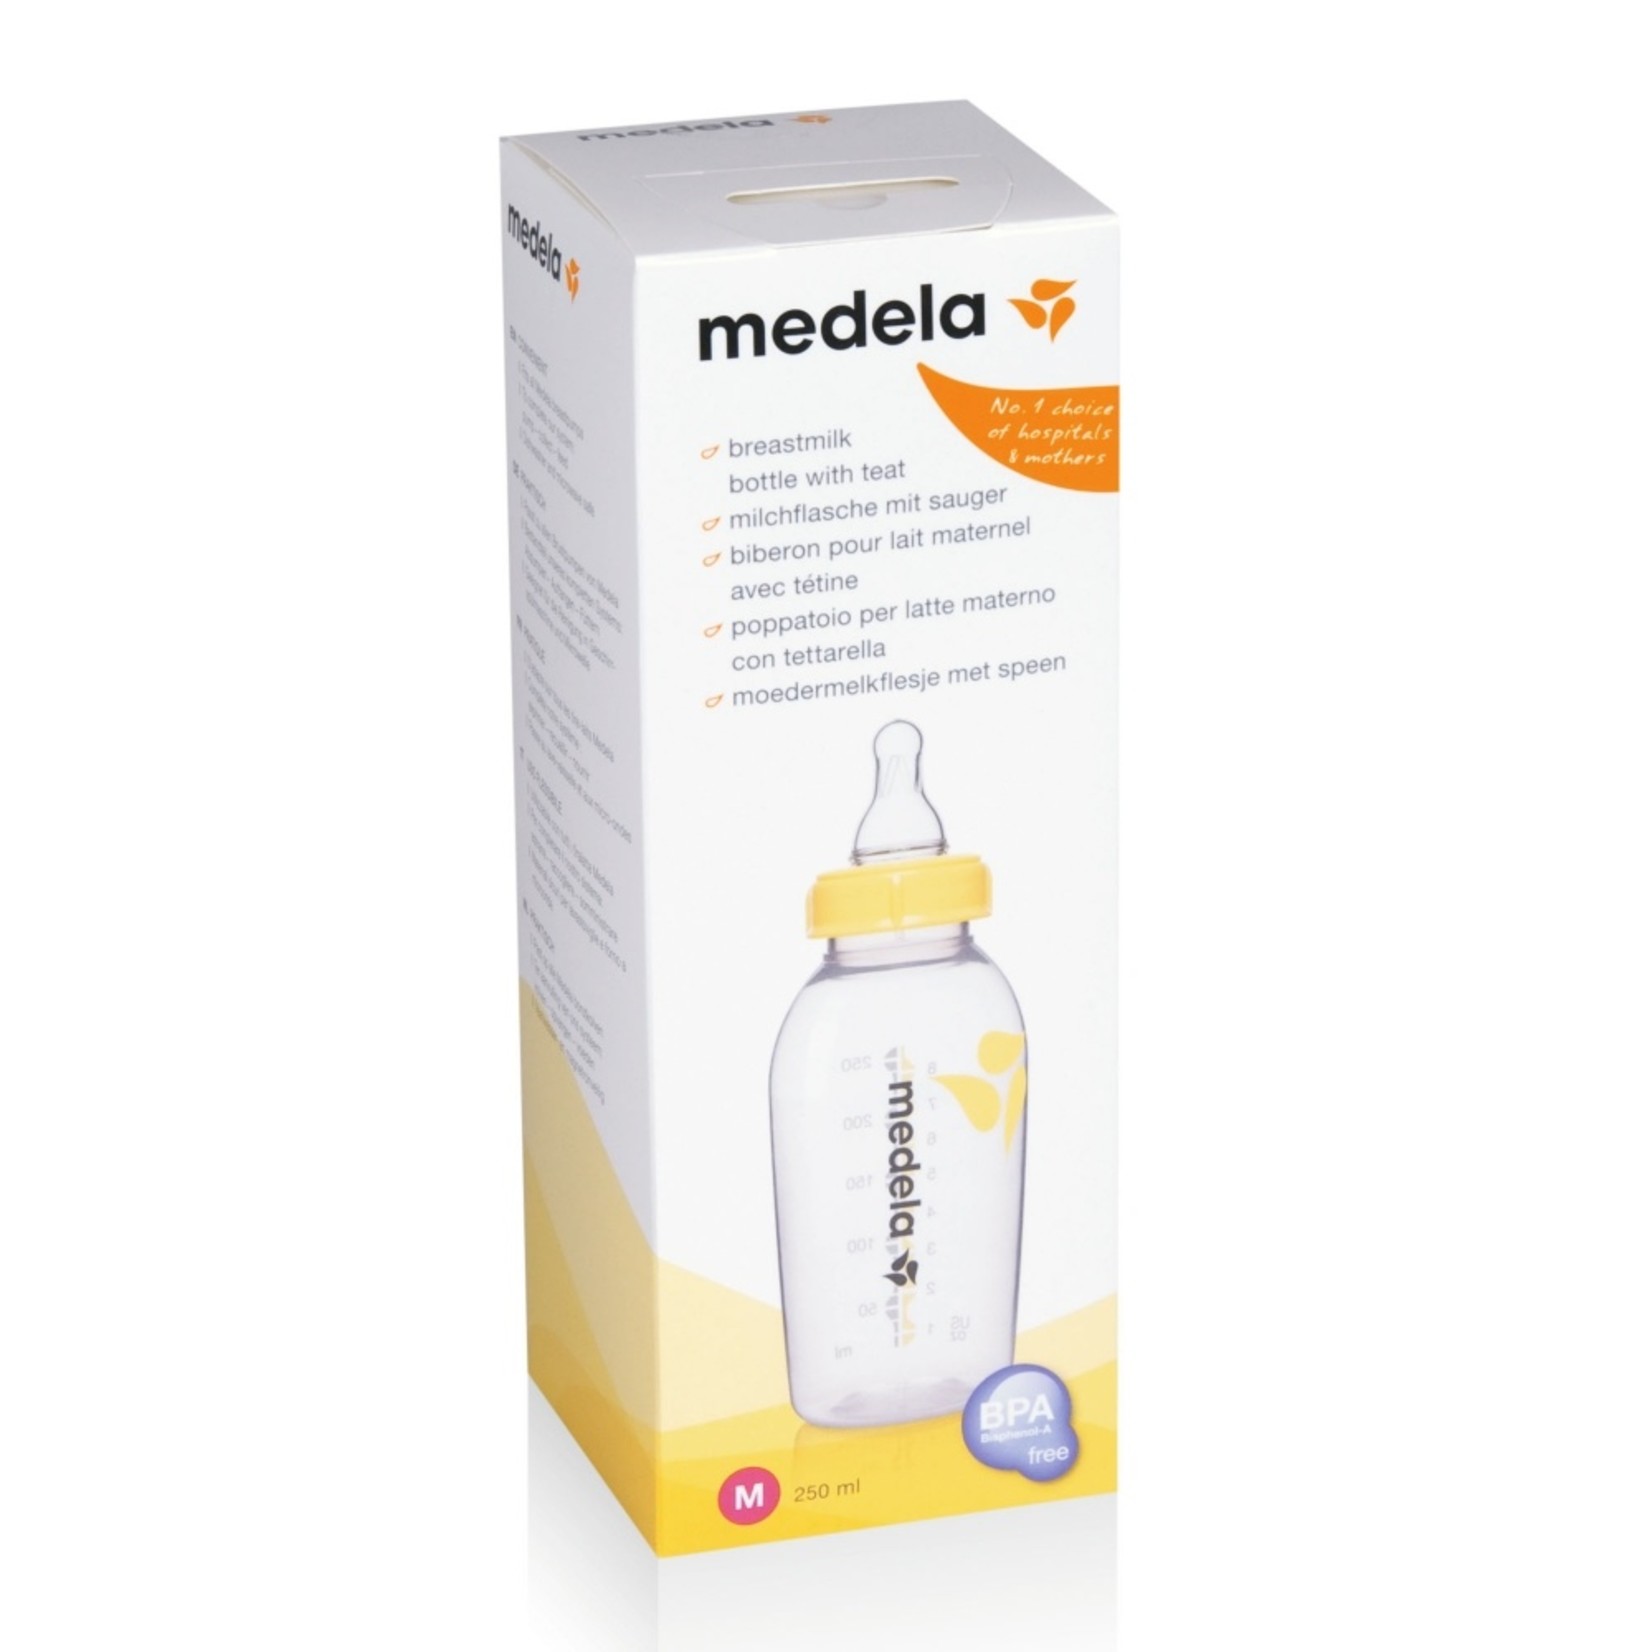 Medela Breastmilk Bottle with teat M(250ml)